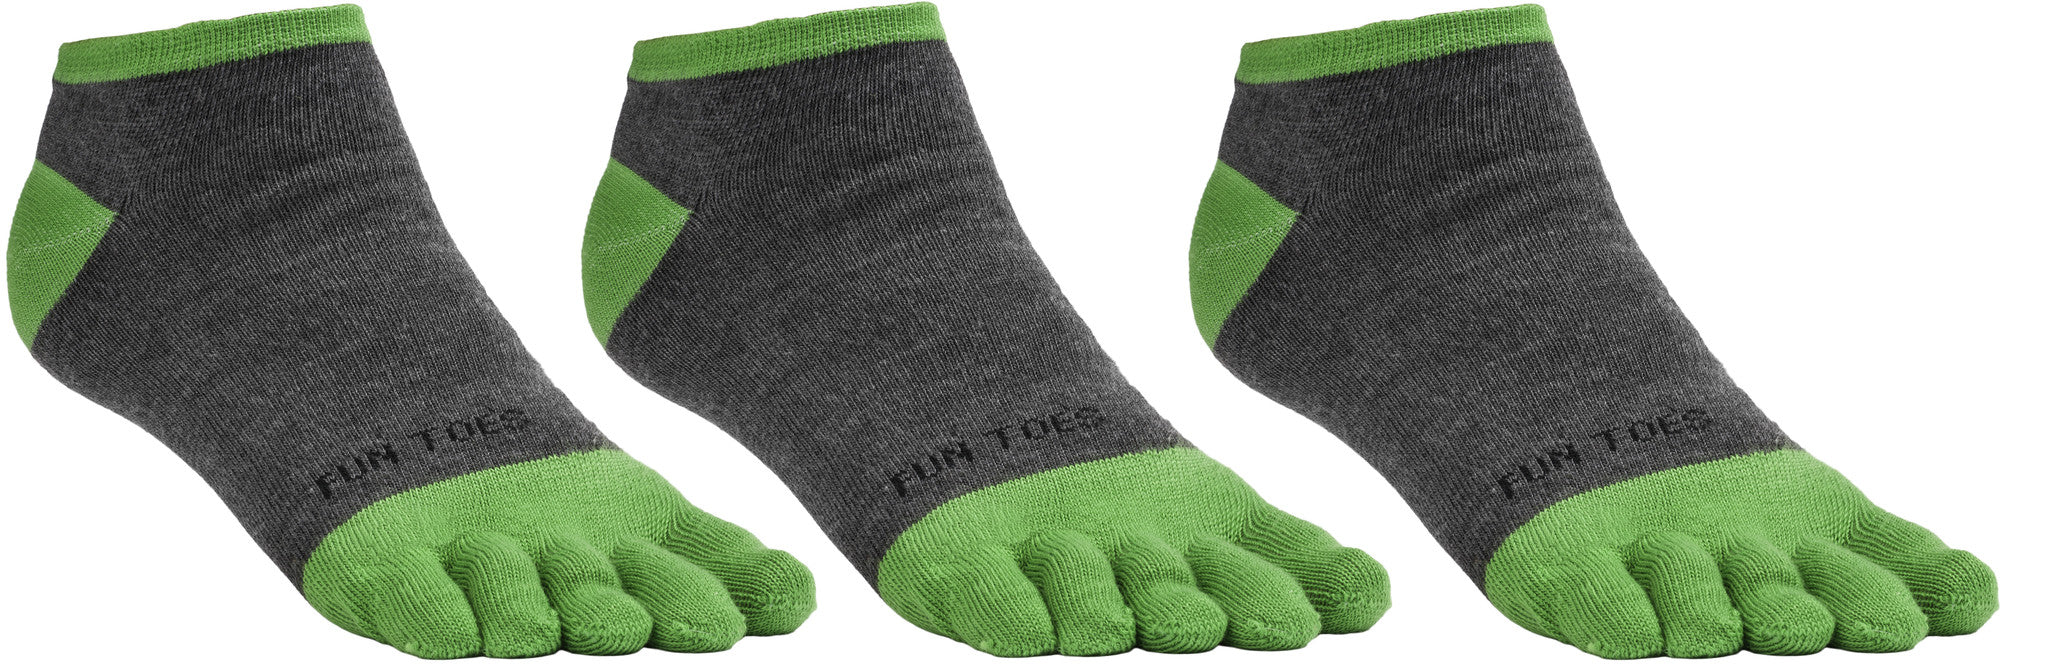 Toe socks - Calzado Barefoot